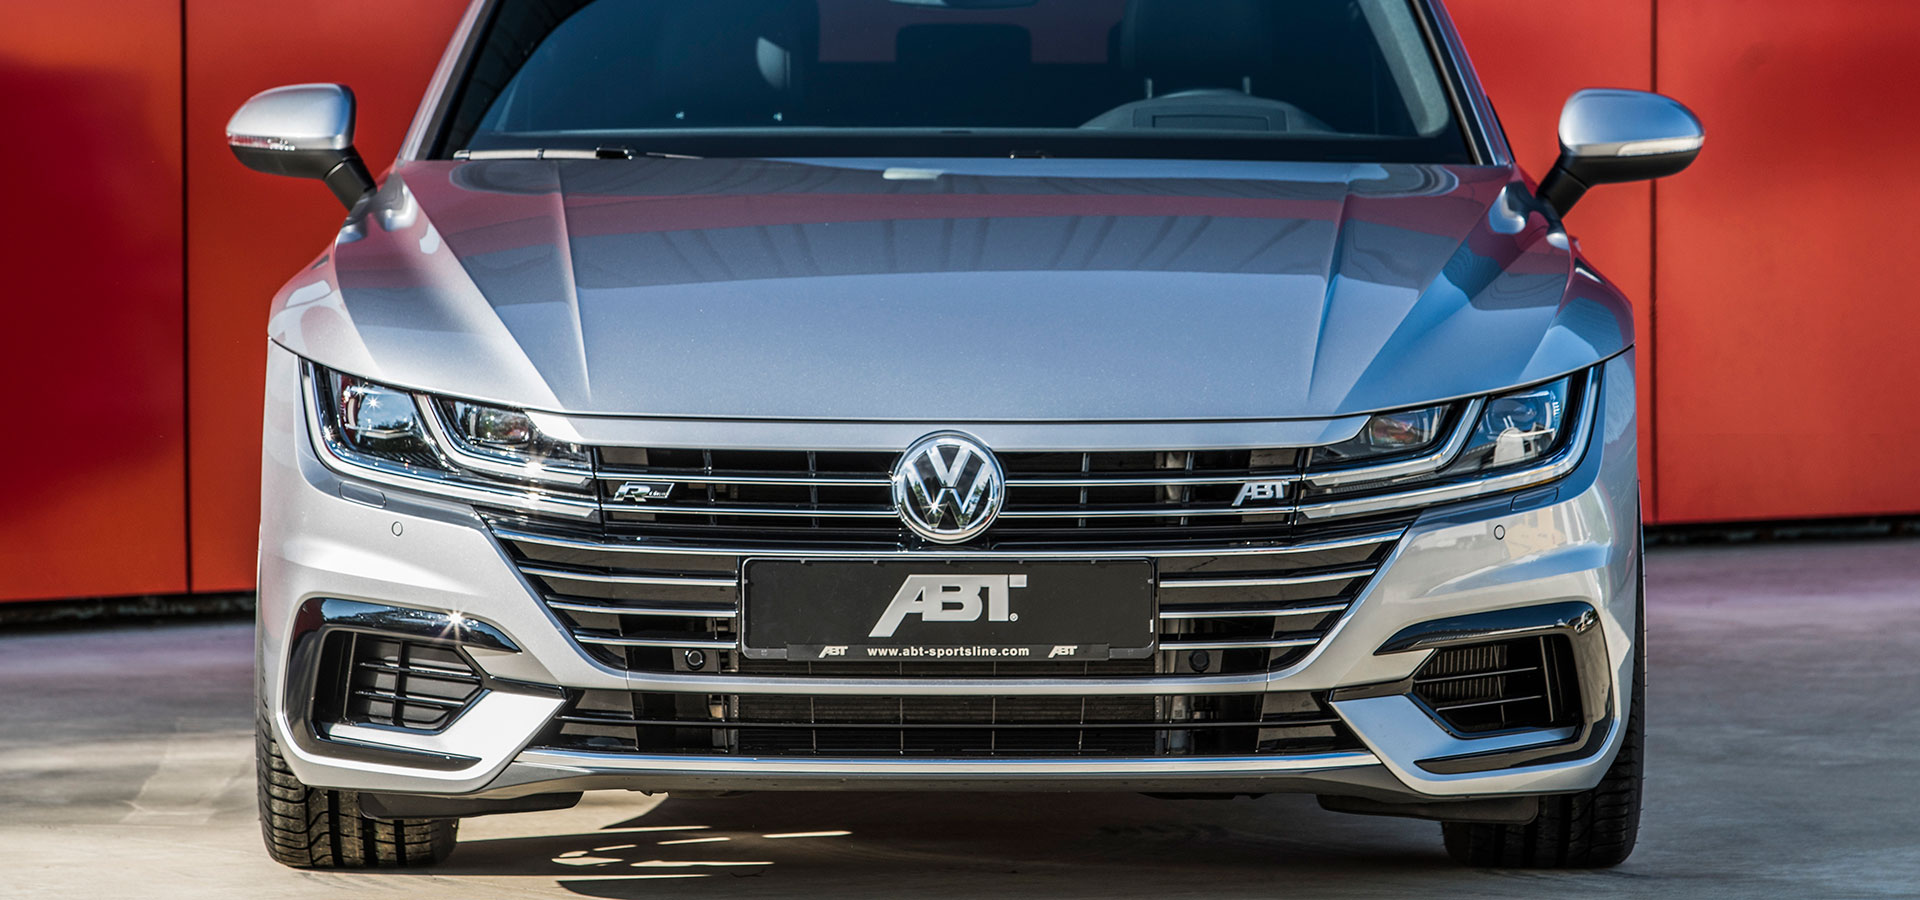 VW Arteon - Audi Tuning, VW Tuning, Chiptuning von ABT Sportsline.